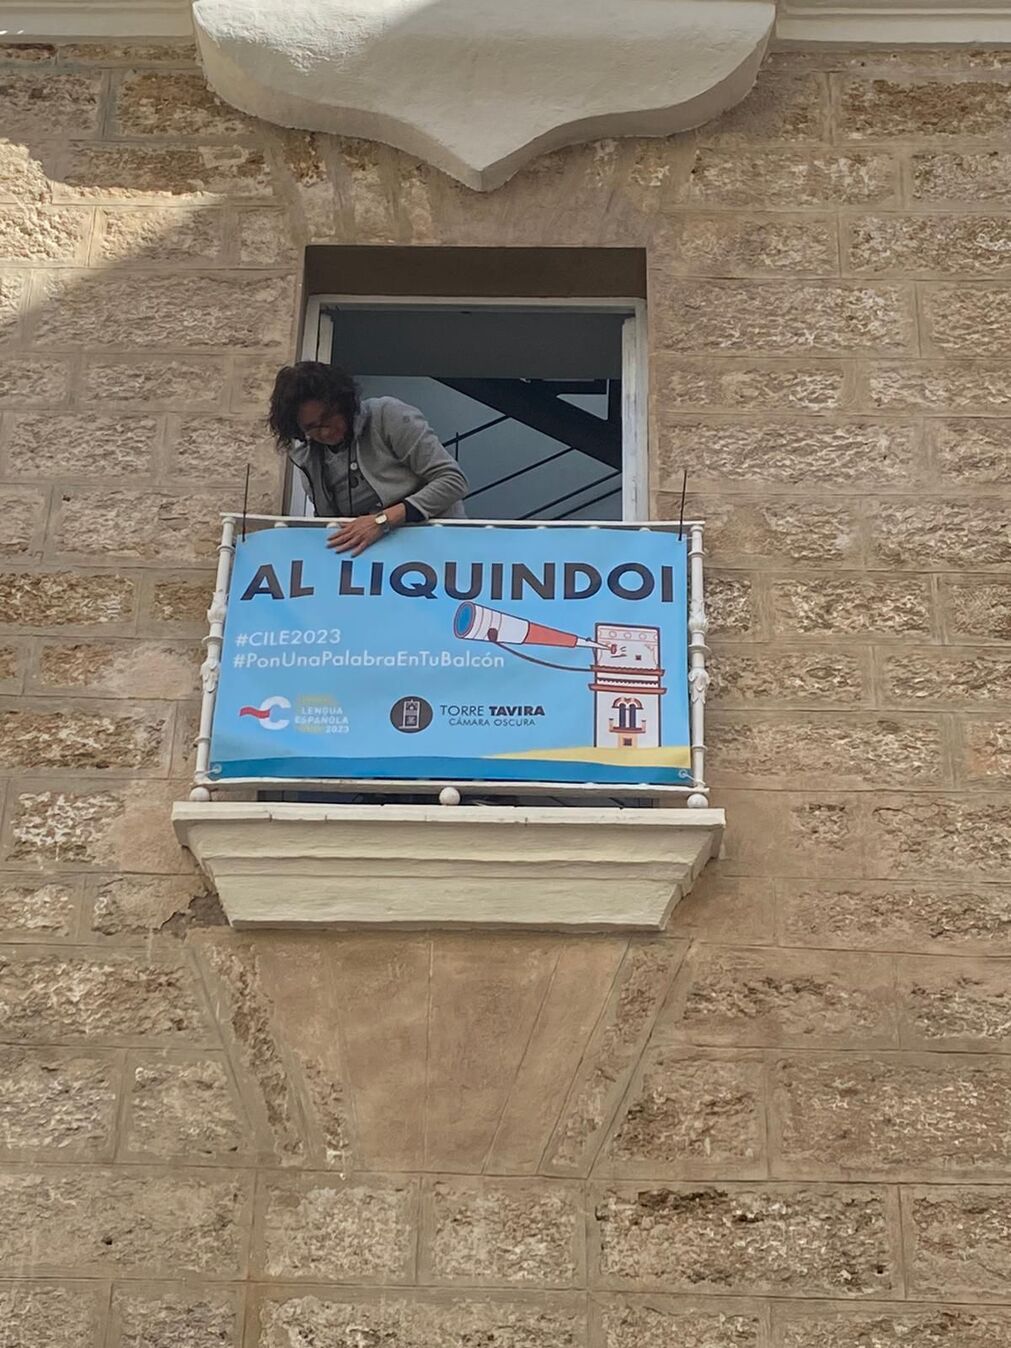 La palabra 'Al liquindoi' en la Torre Tavira